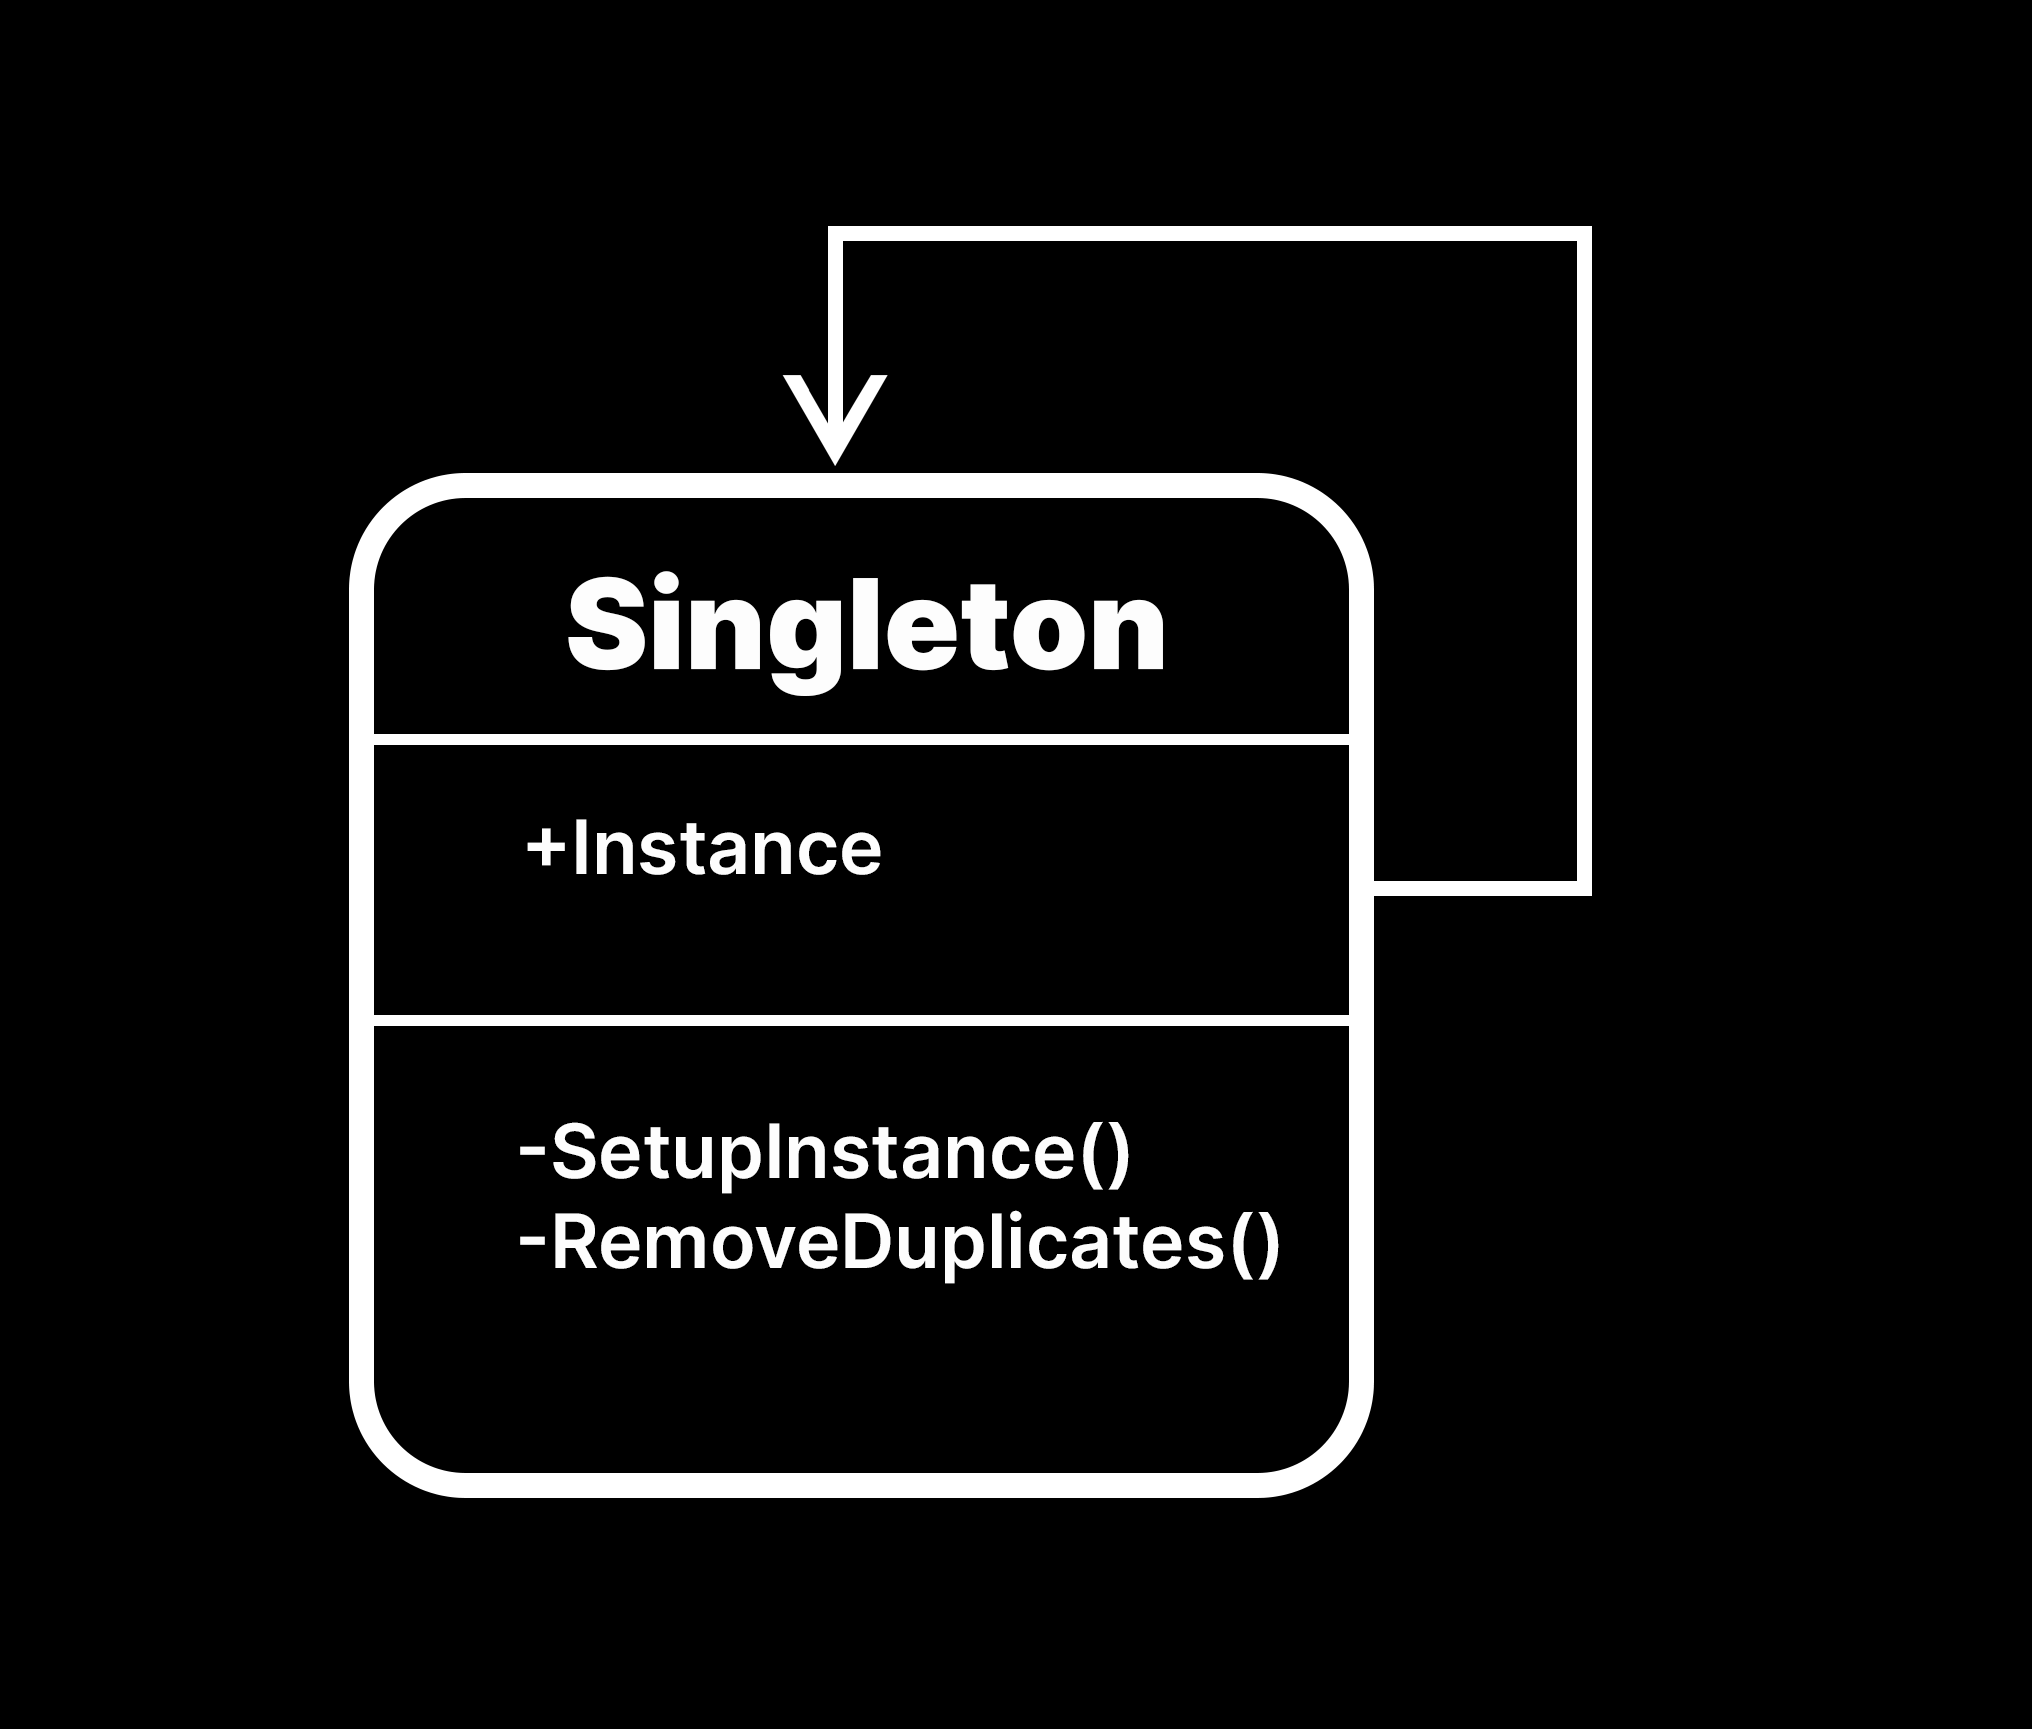 An illustration of the singleton pattern.